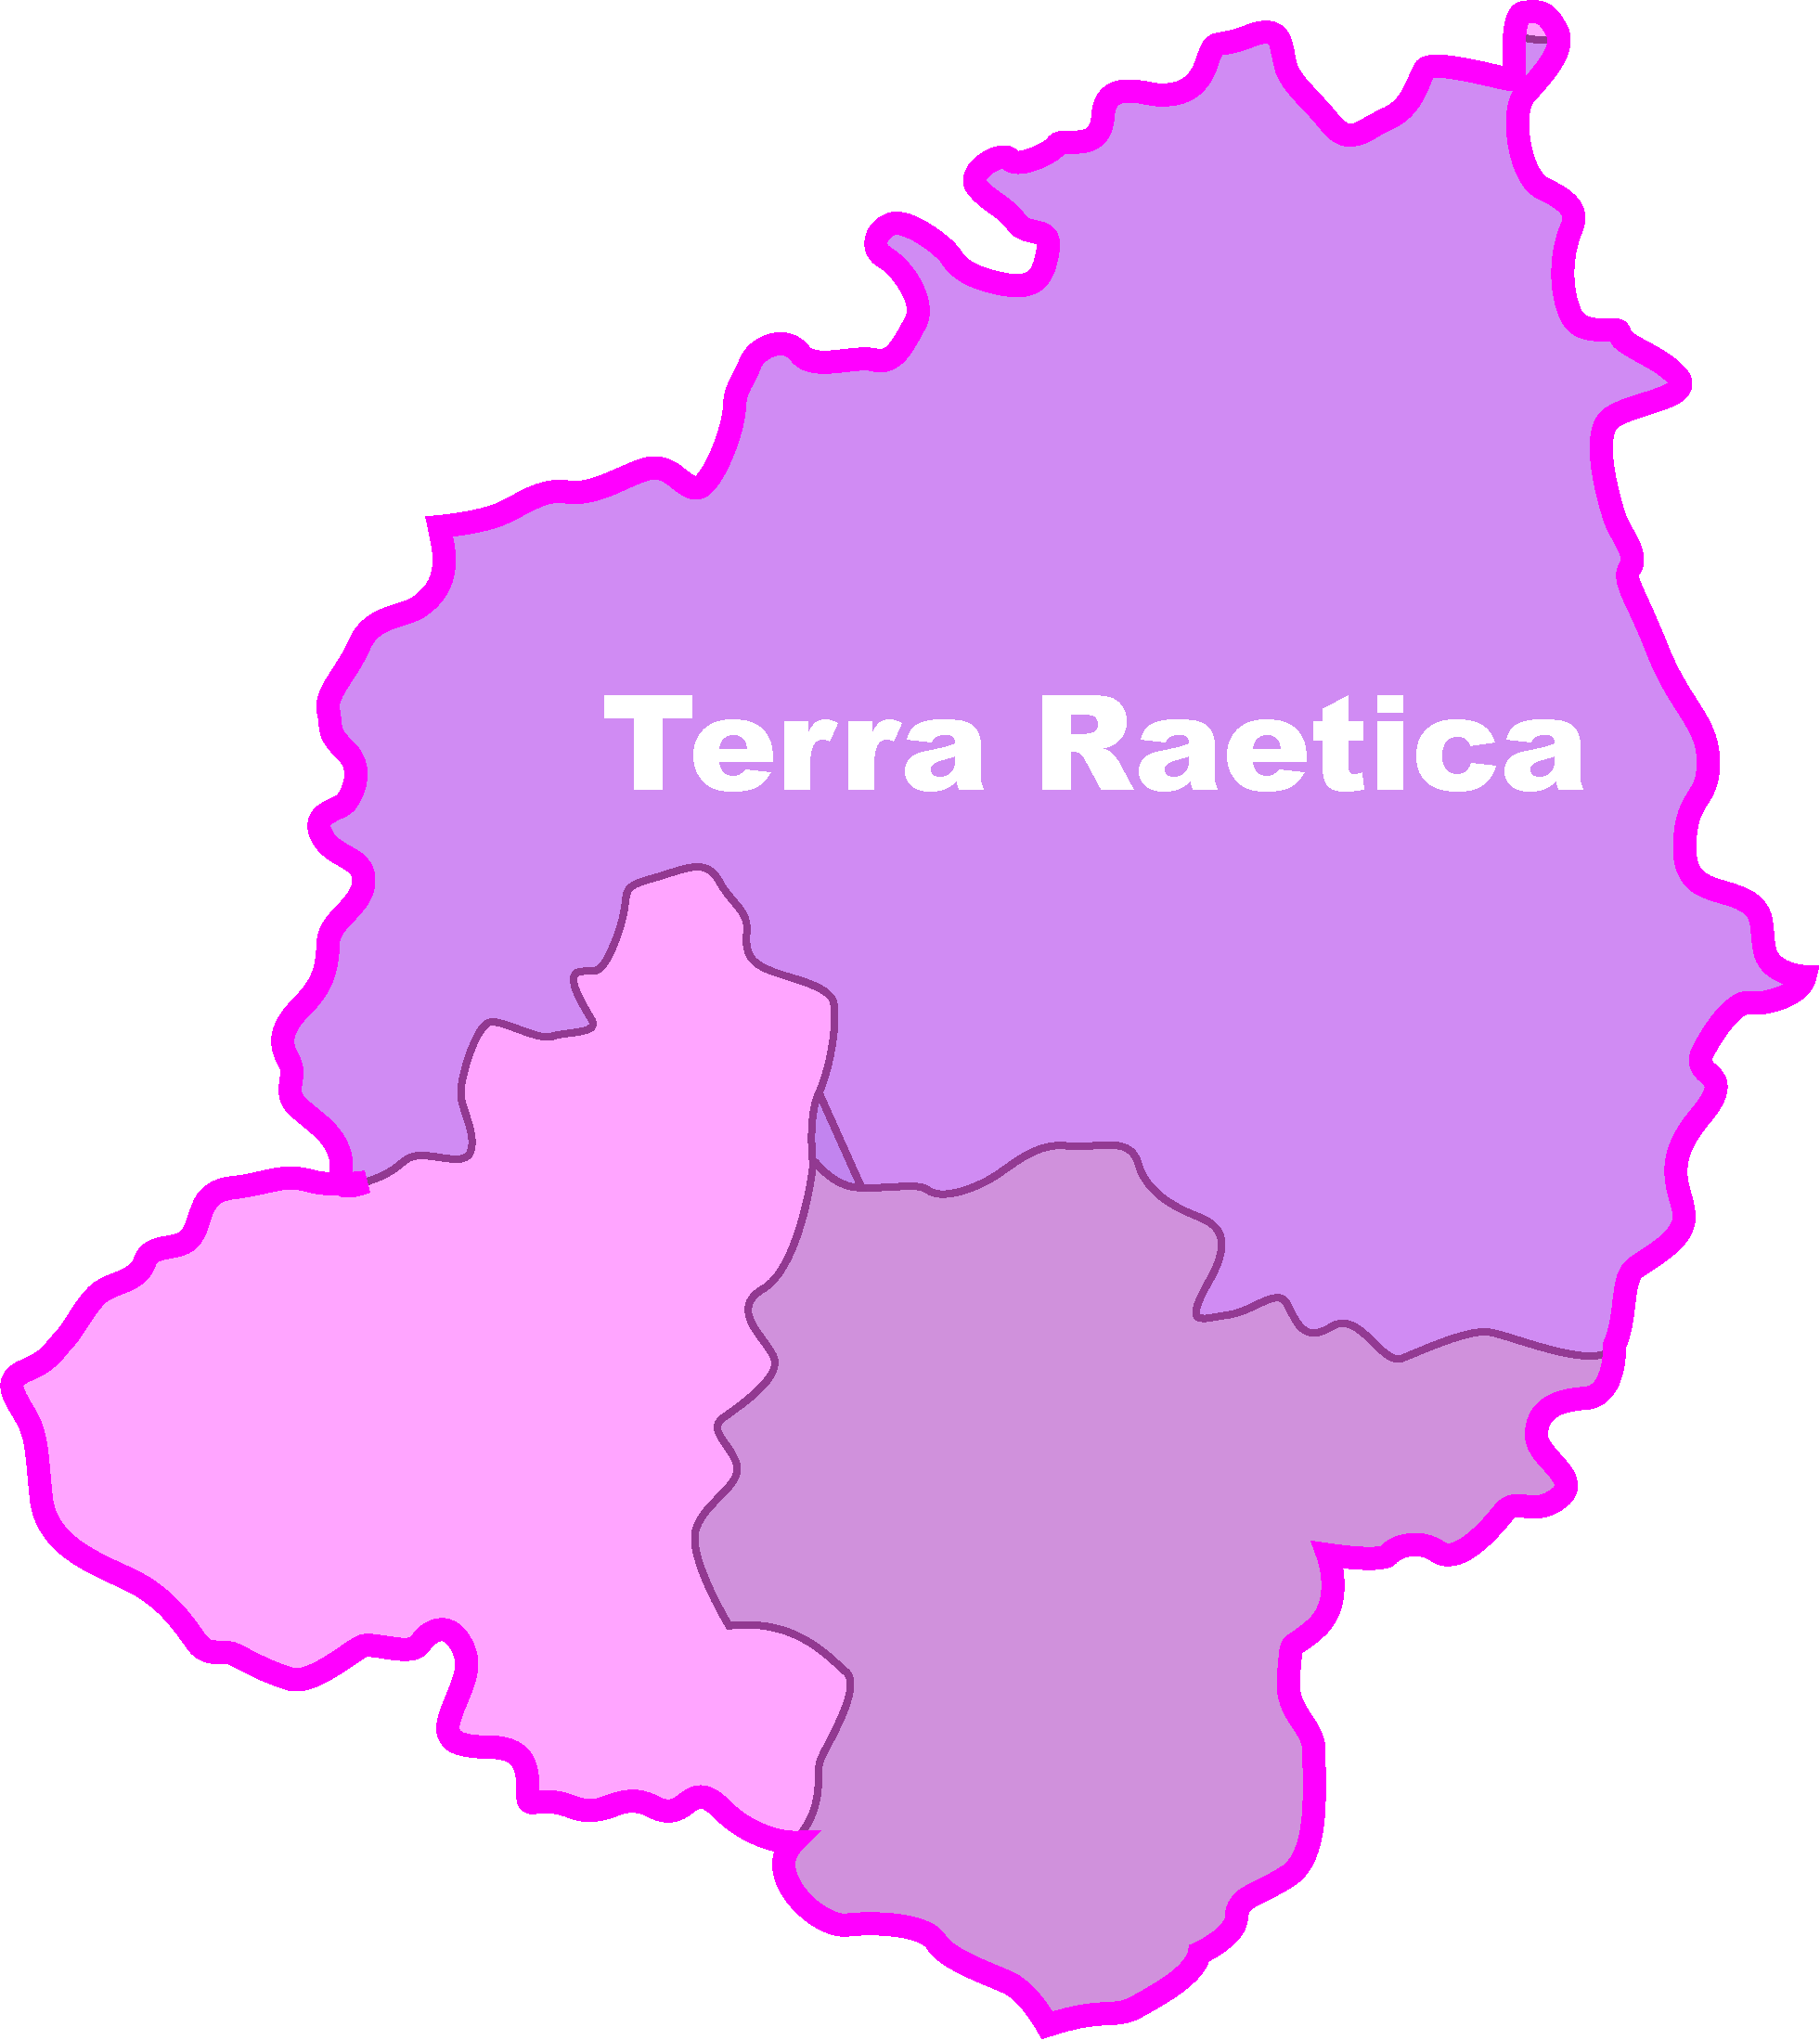 Terra Raetica link